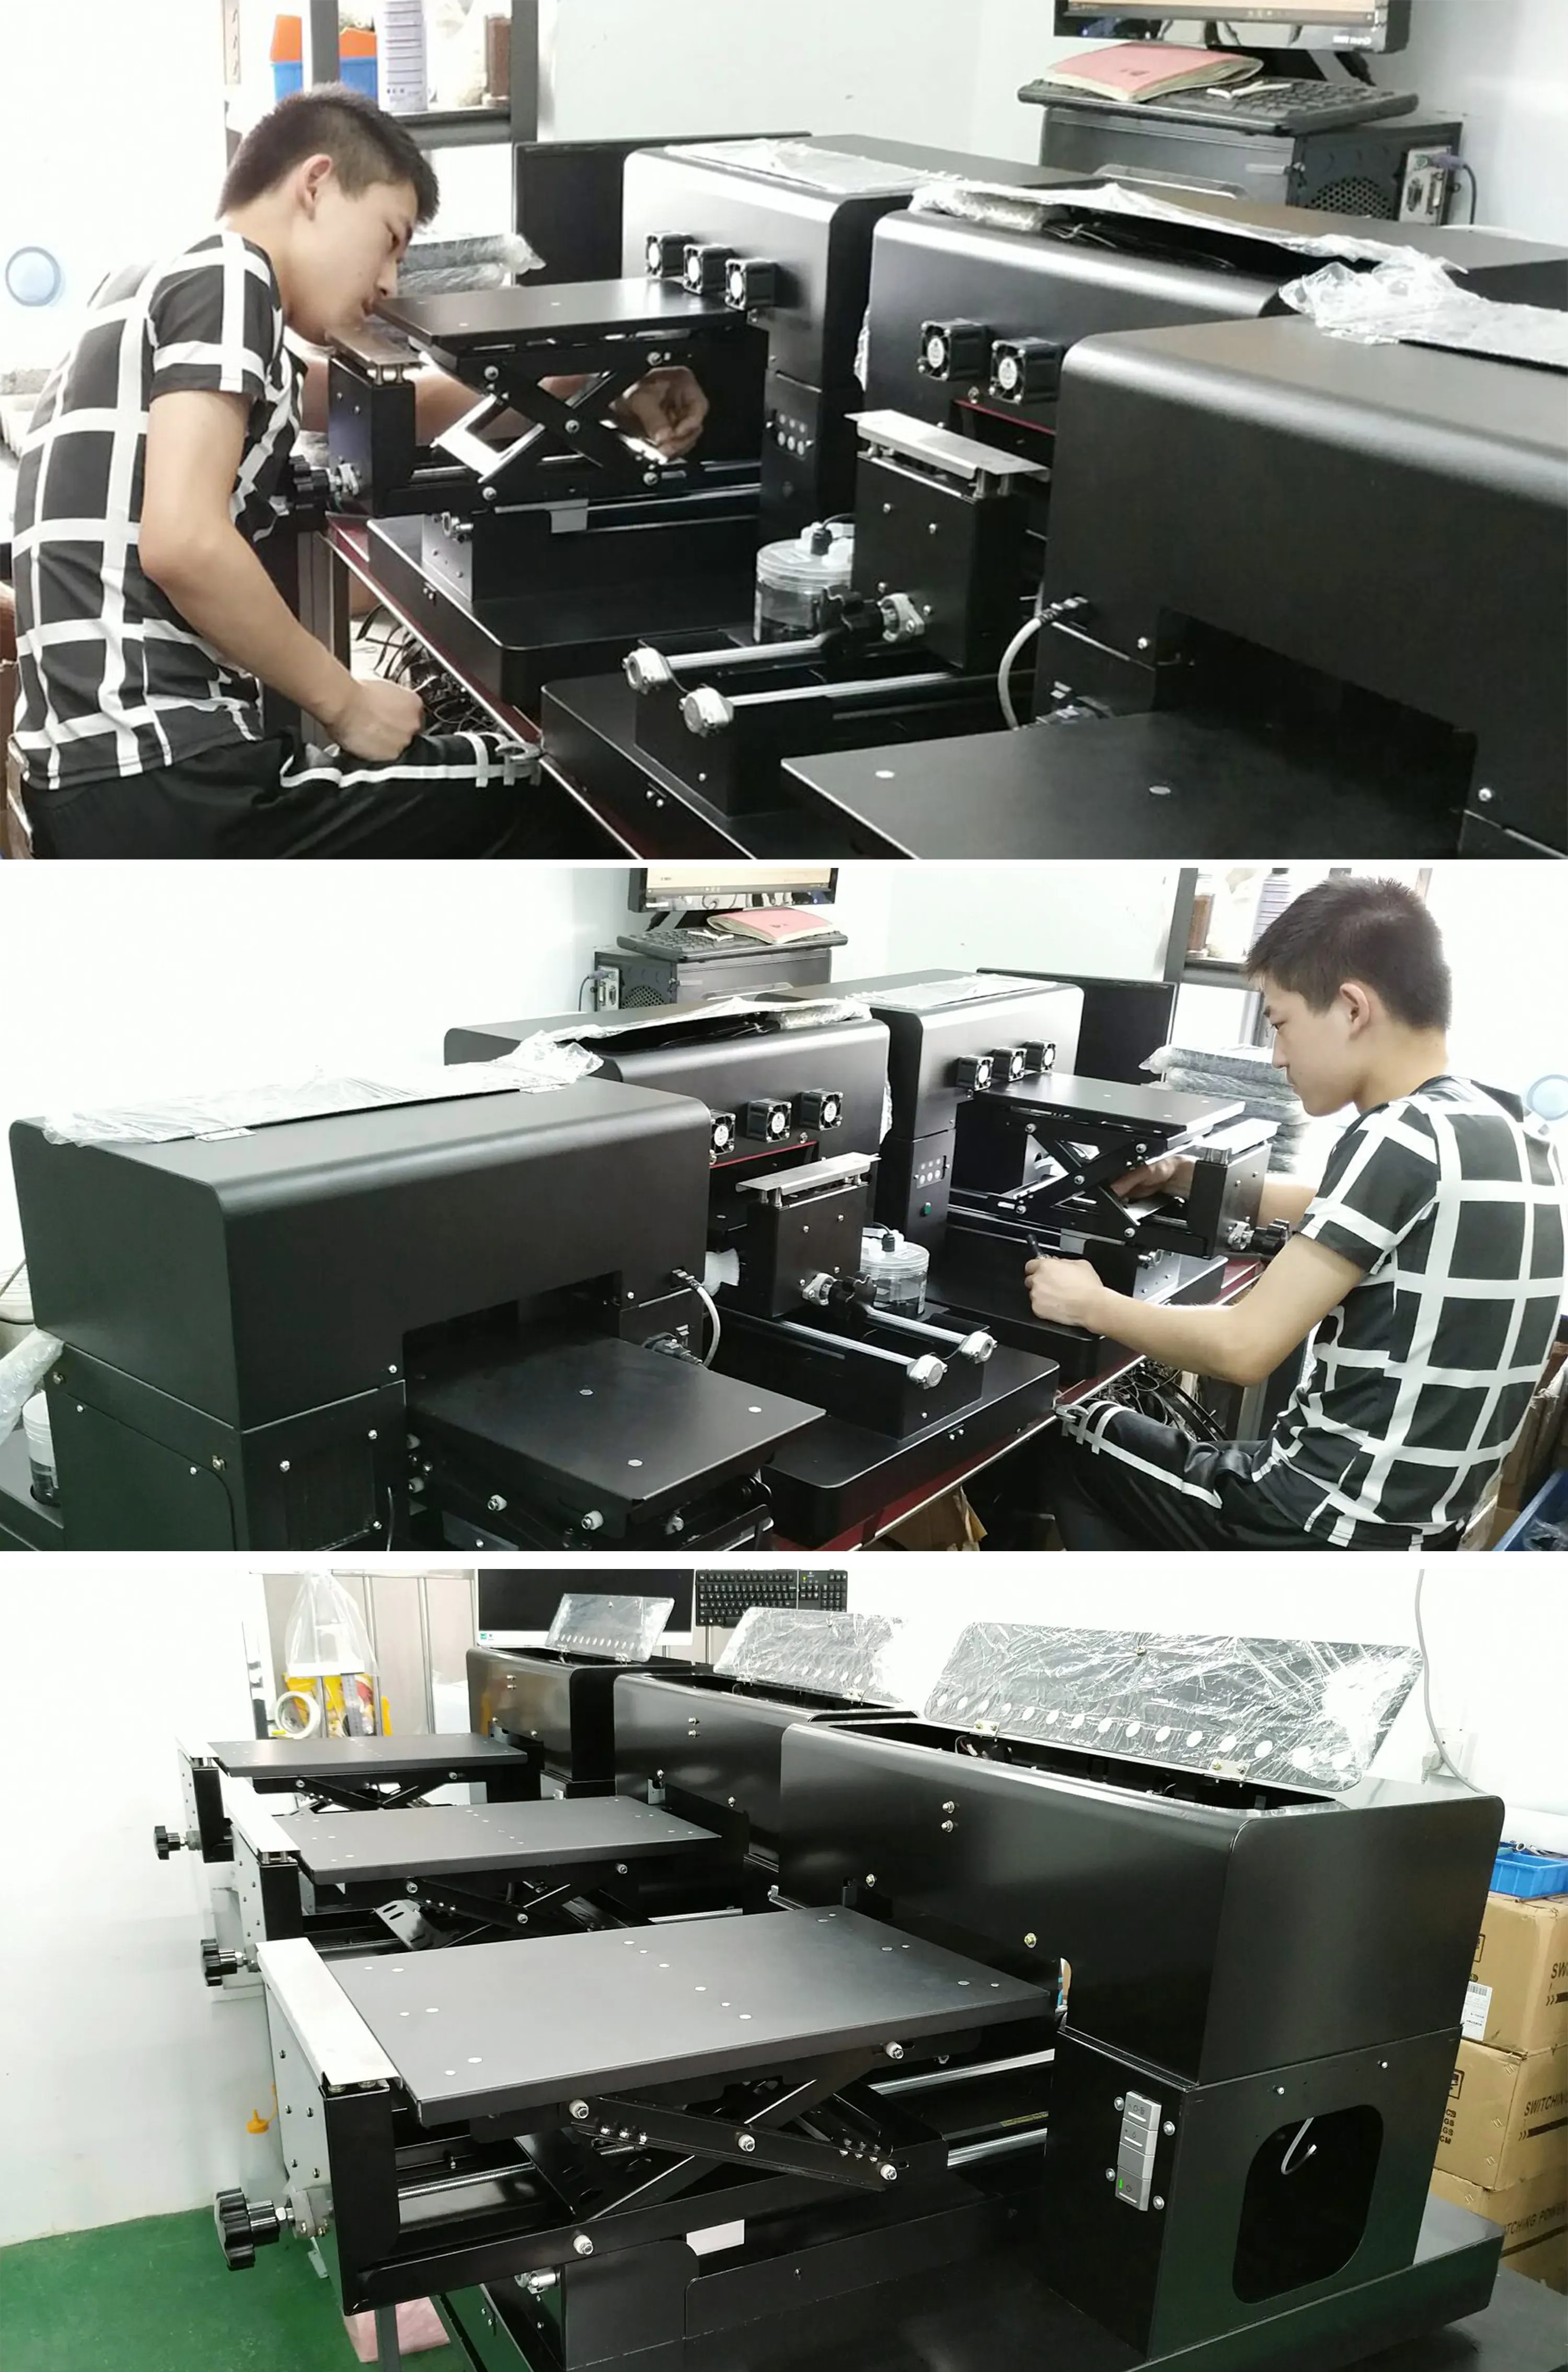 Flatbed digital uv printer for plastic pvc printer a4